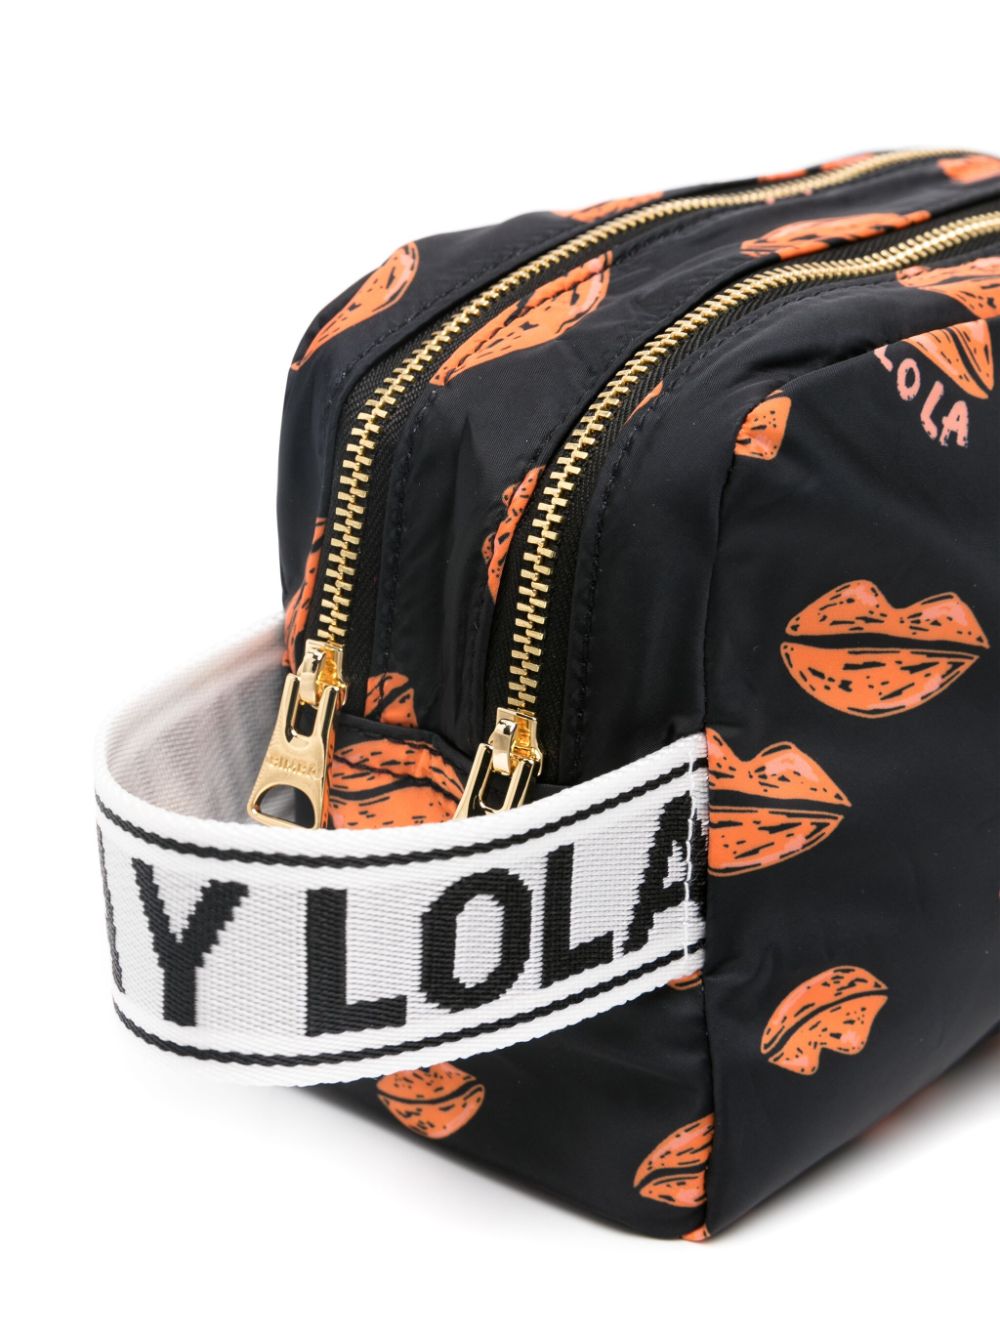 Bimba Y Lola logo-print Makeup Bag - Black